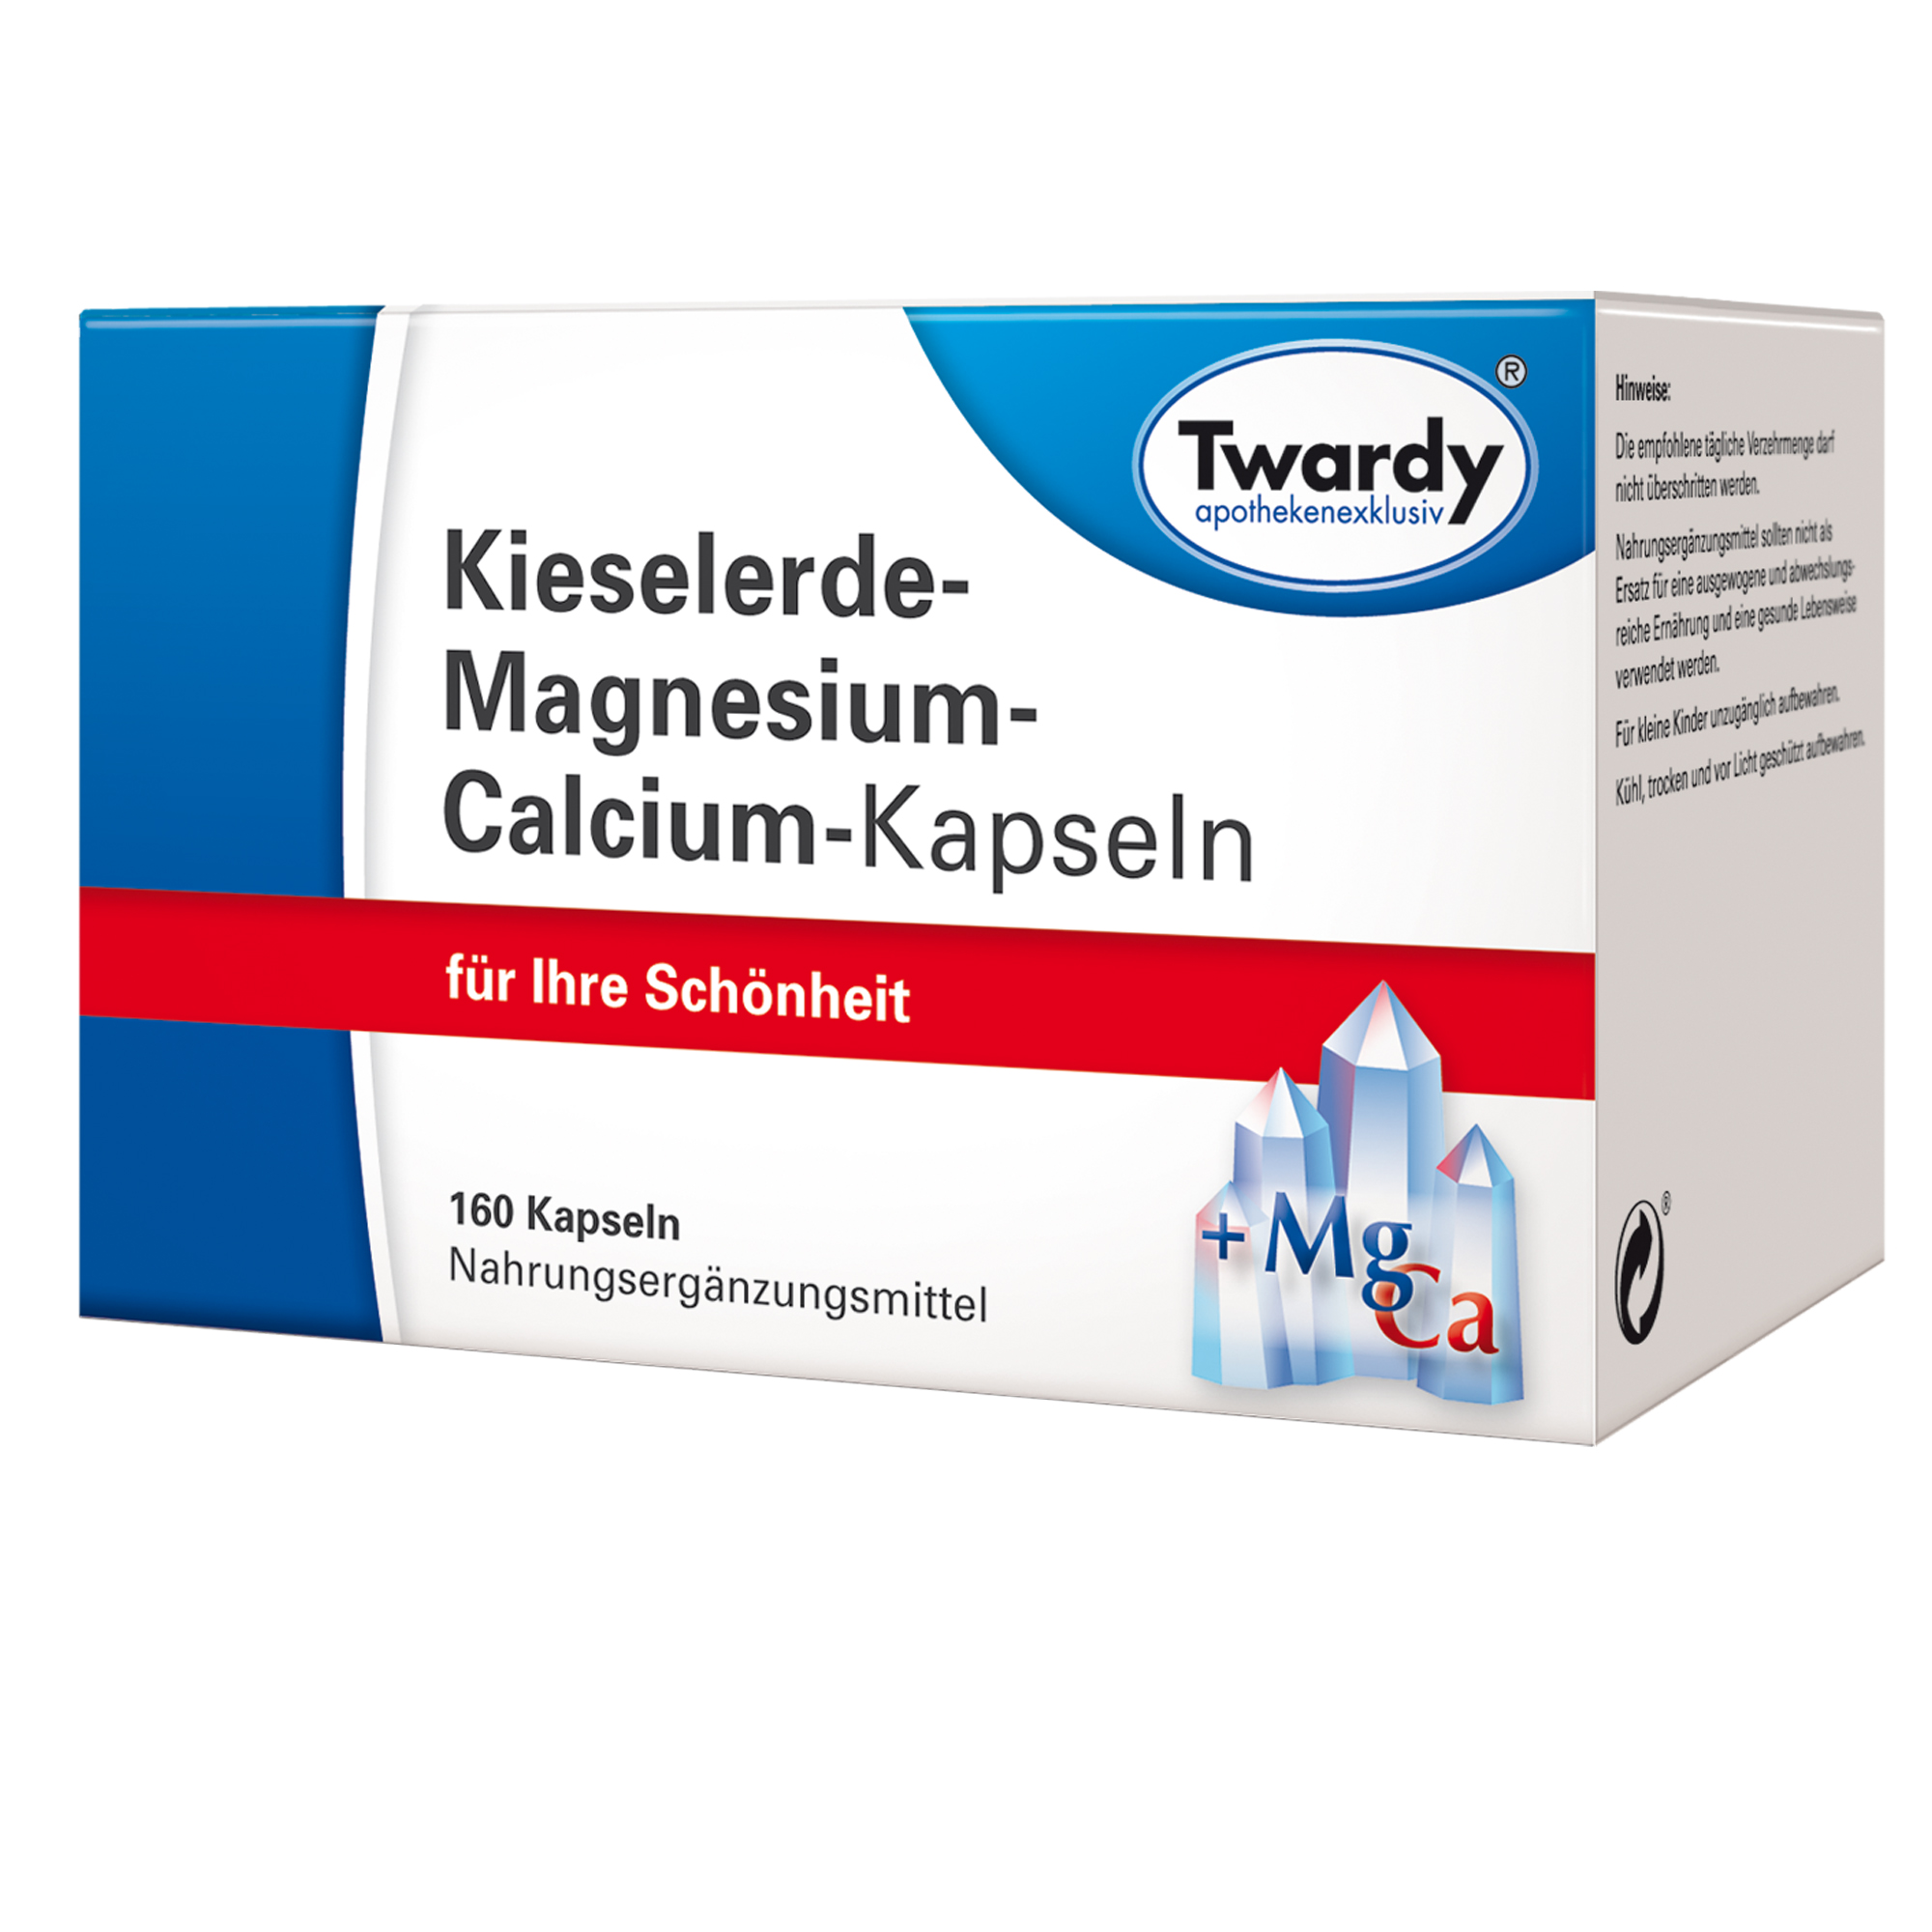 Kieselerde-Magnesium-Calcium-Kapseln 60